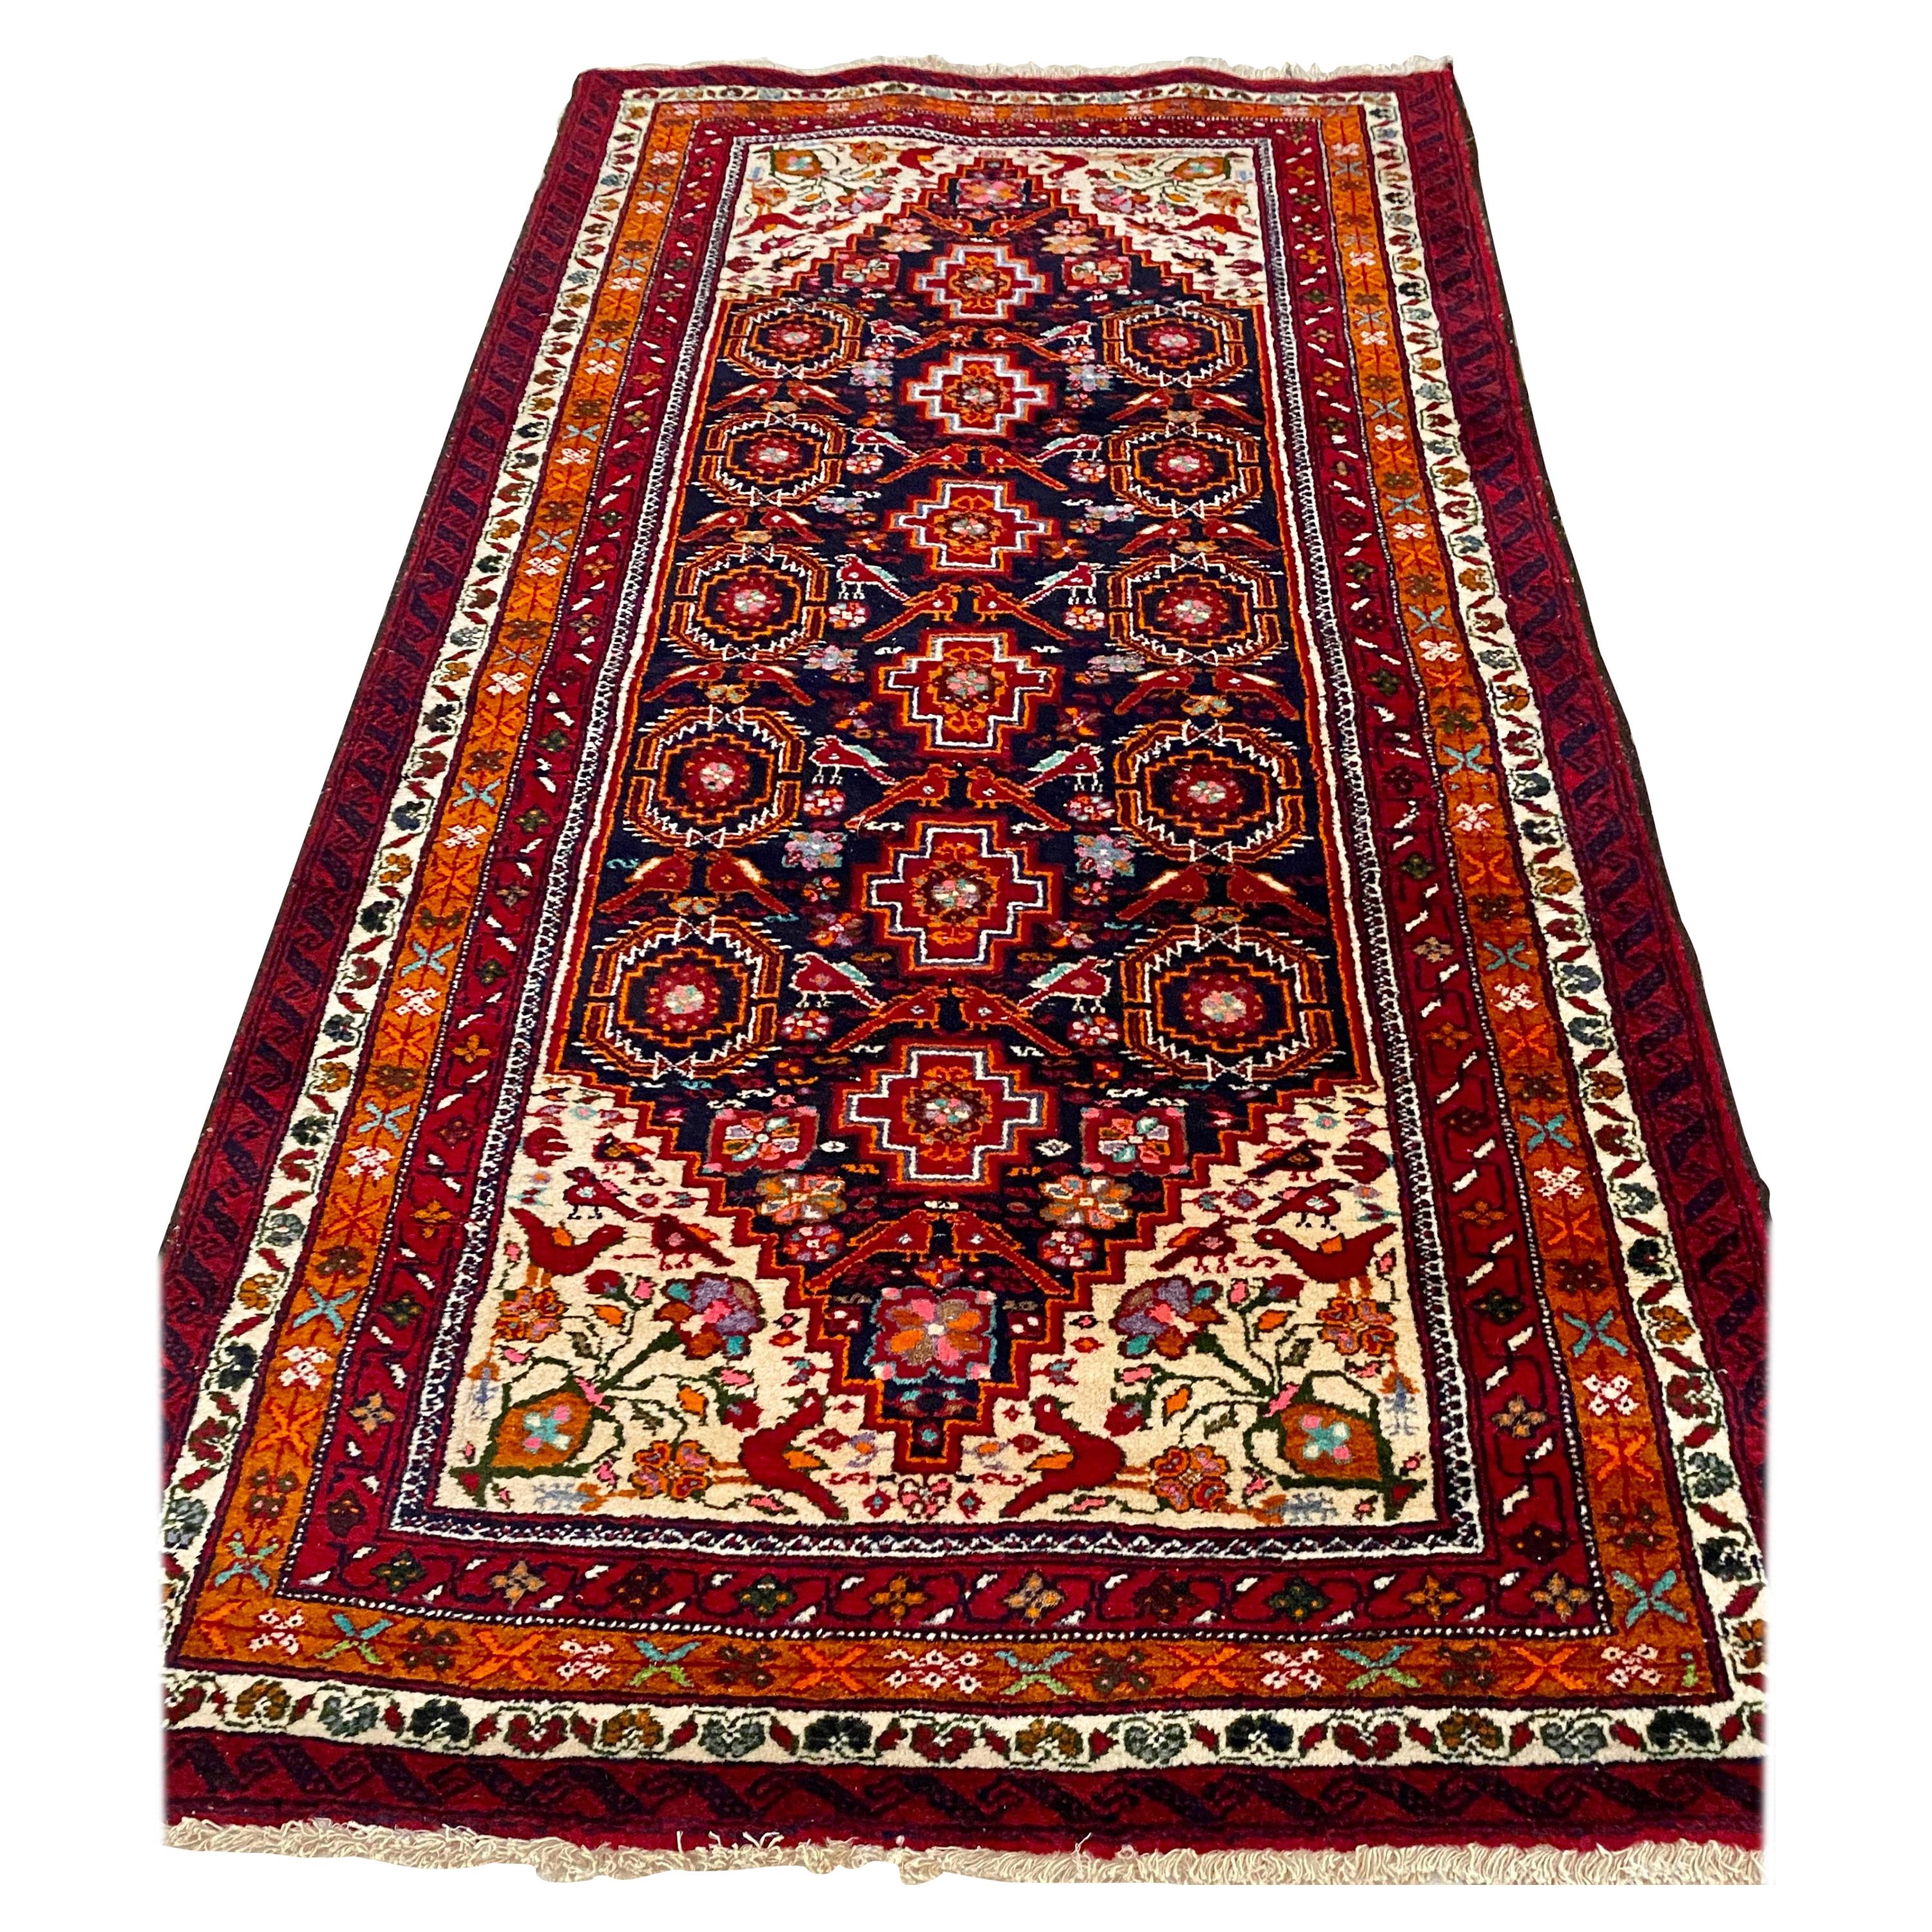 Petit tapis persan ancien Bakhtiari tribal rouge marine et bleu marine